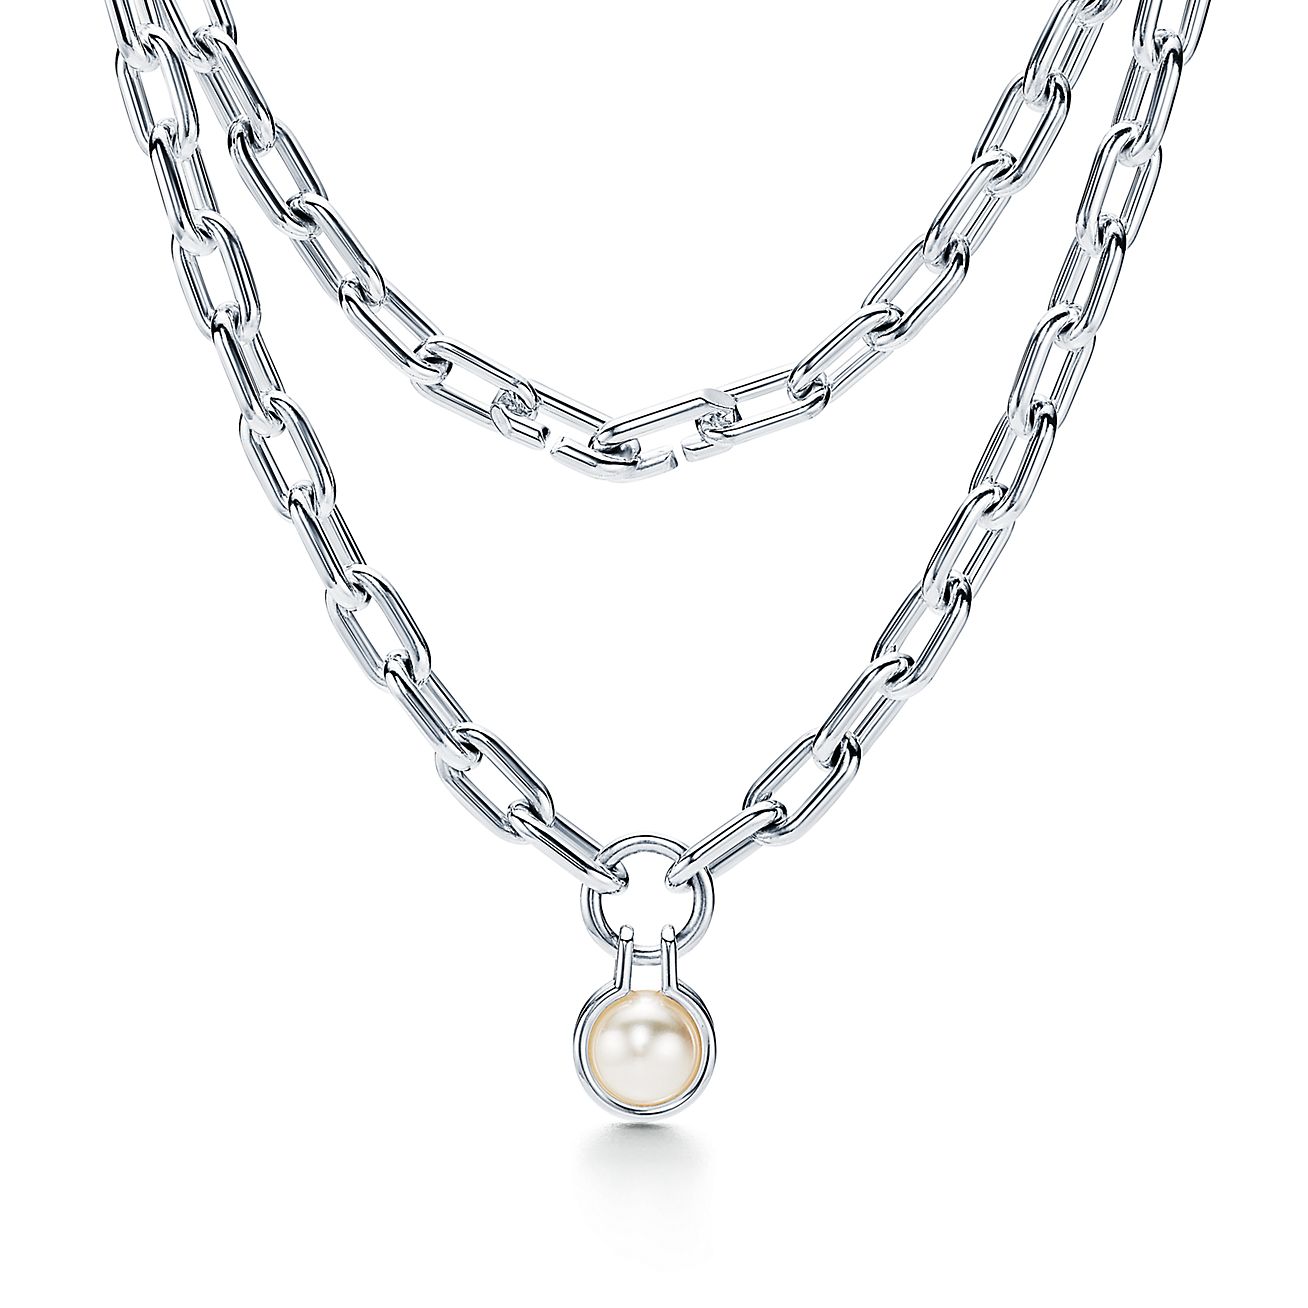 Tiffany HardWearFreshwater Pearl Necklace in Sterling Silver, 32"